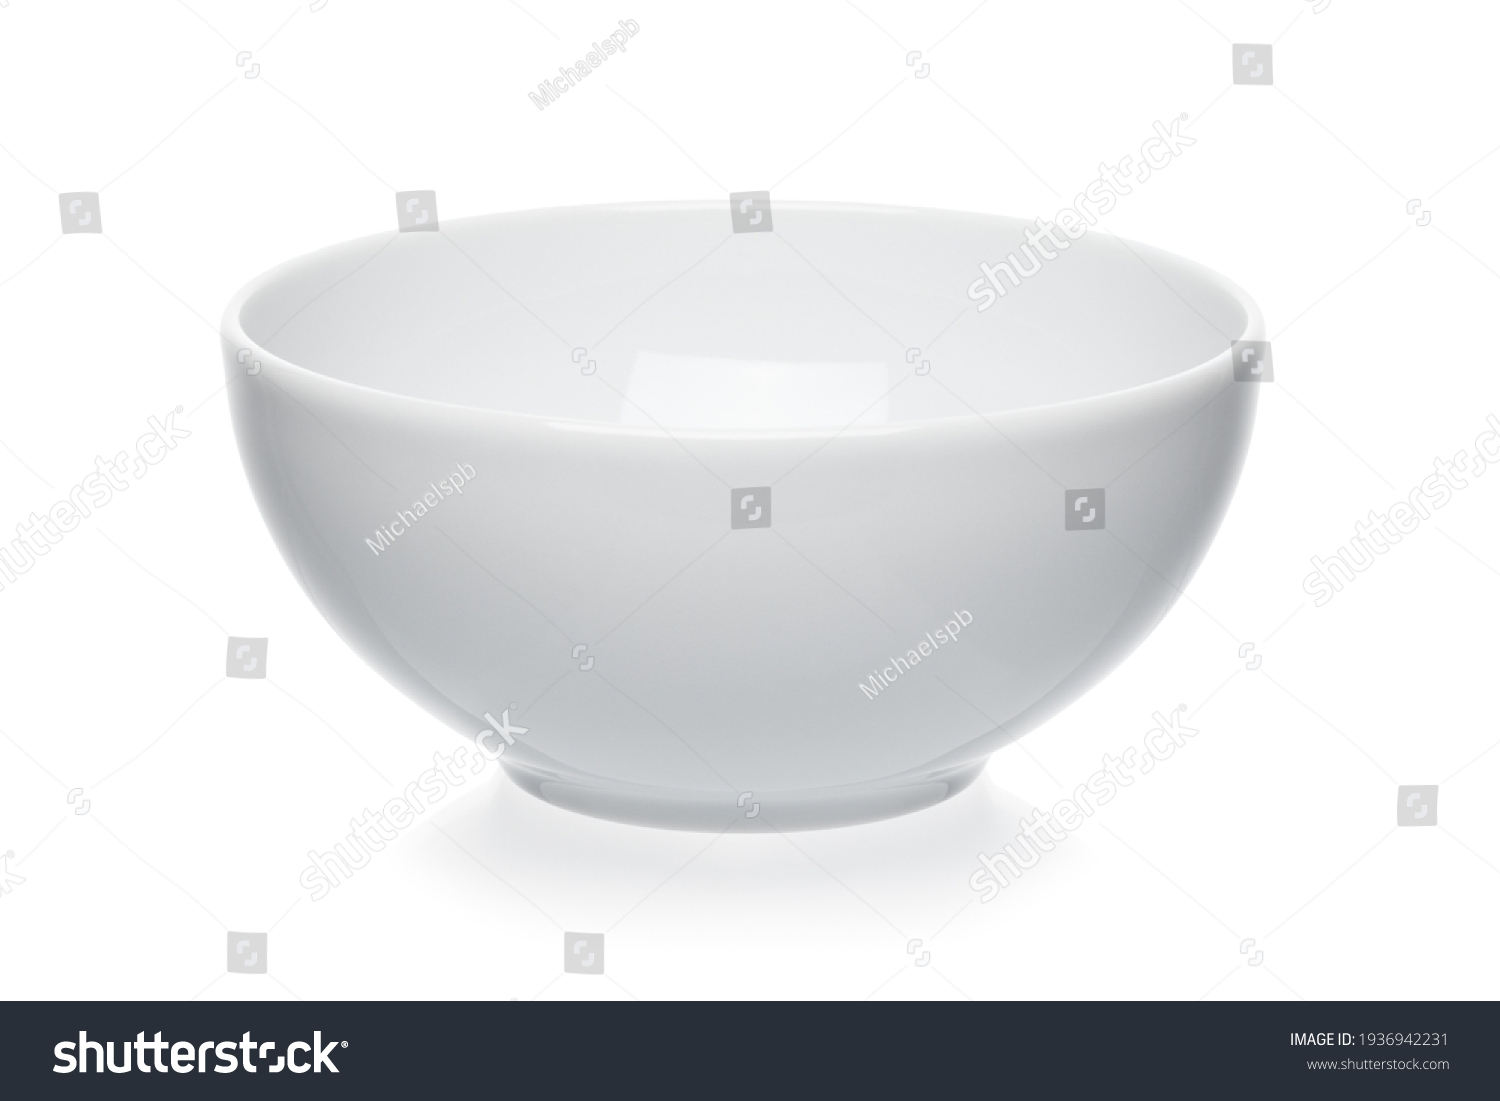 Empty white bowl isolated on white background #1936942231